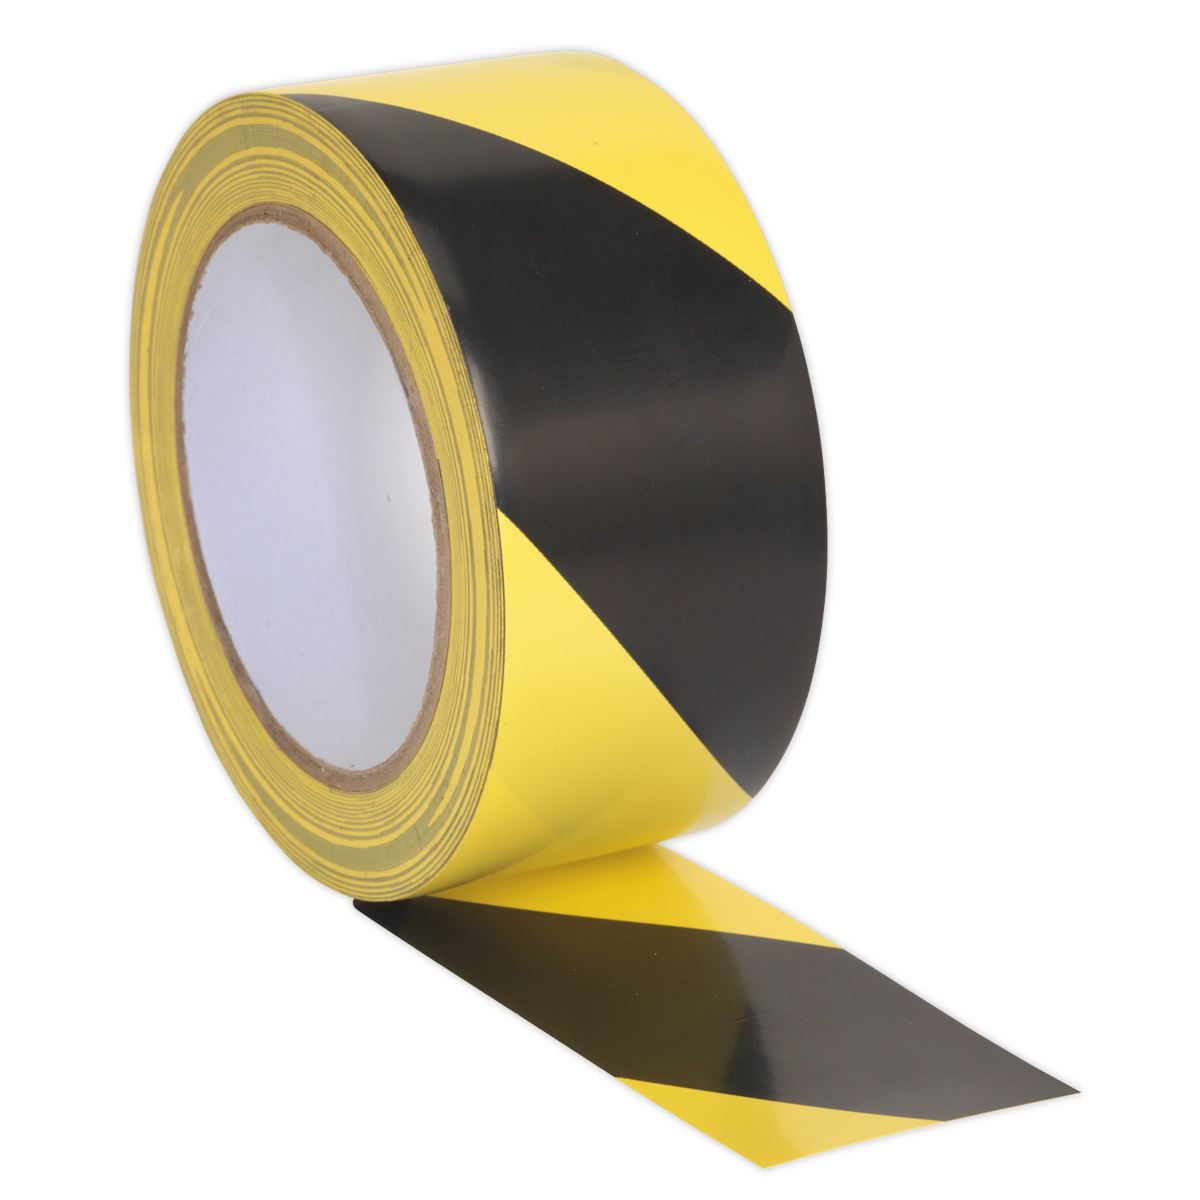 Sealey Hazard Warning Tape 50mm x 33m Black/Yellow